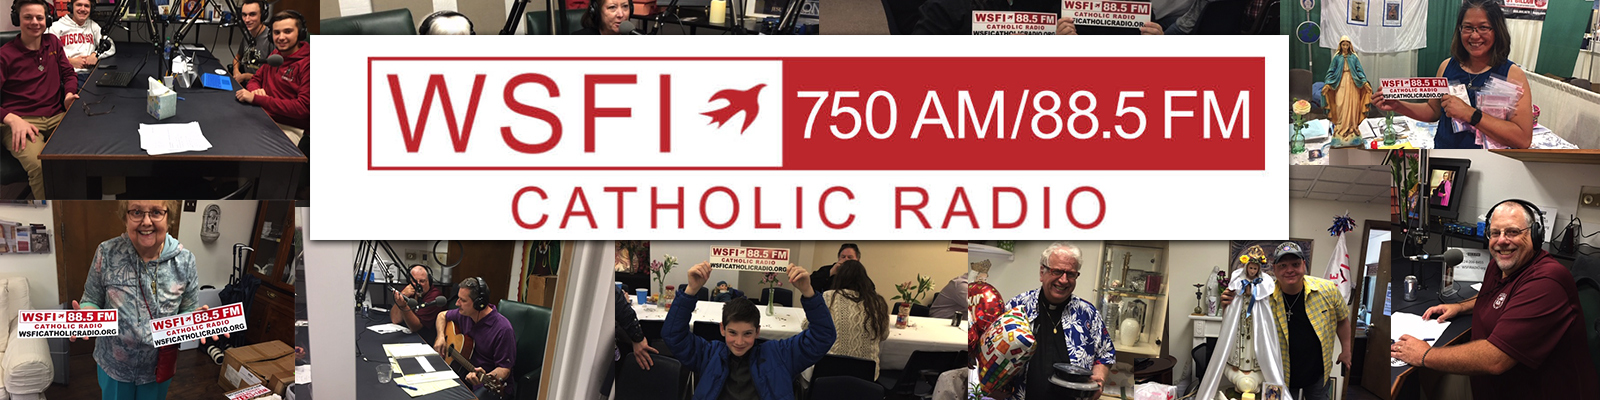 WSFI Catholic Radio:  88.5FM and 750AM